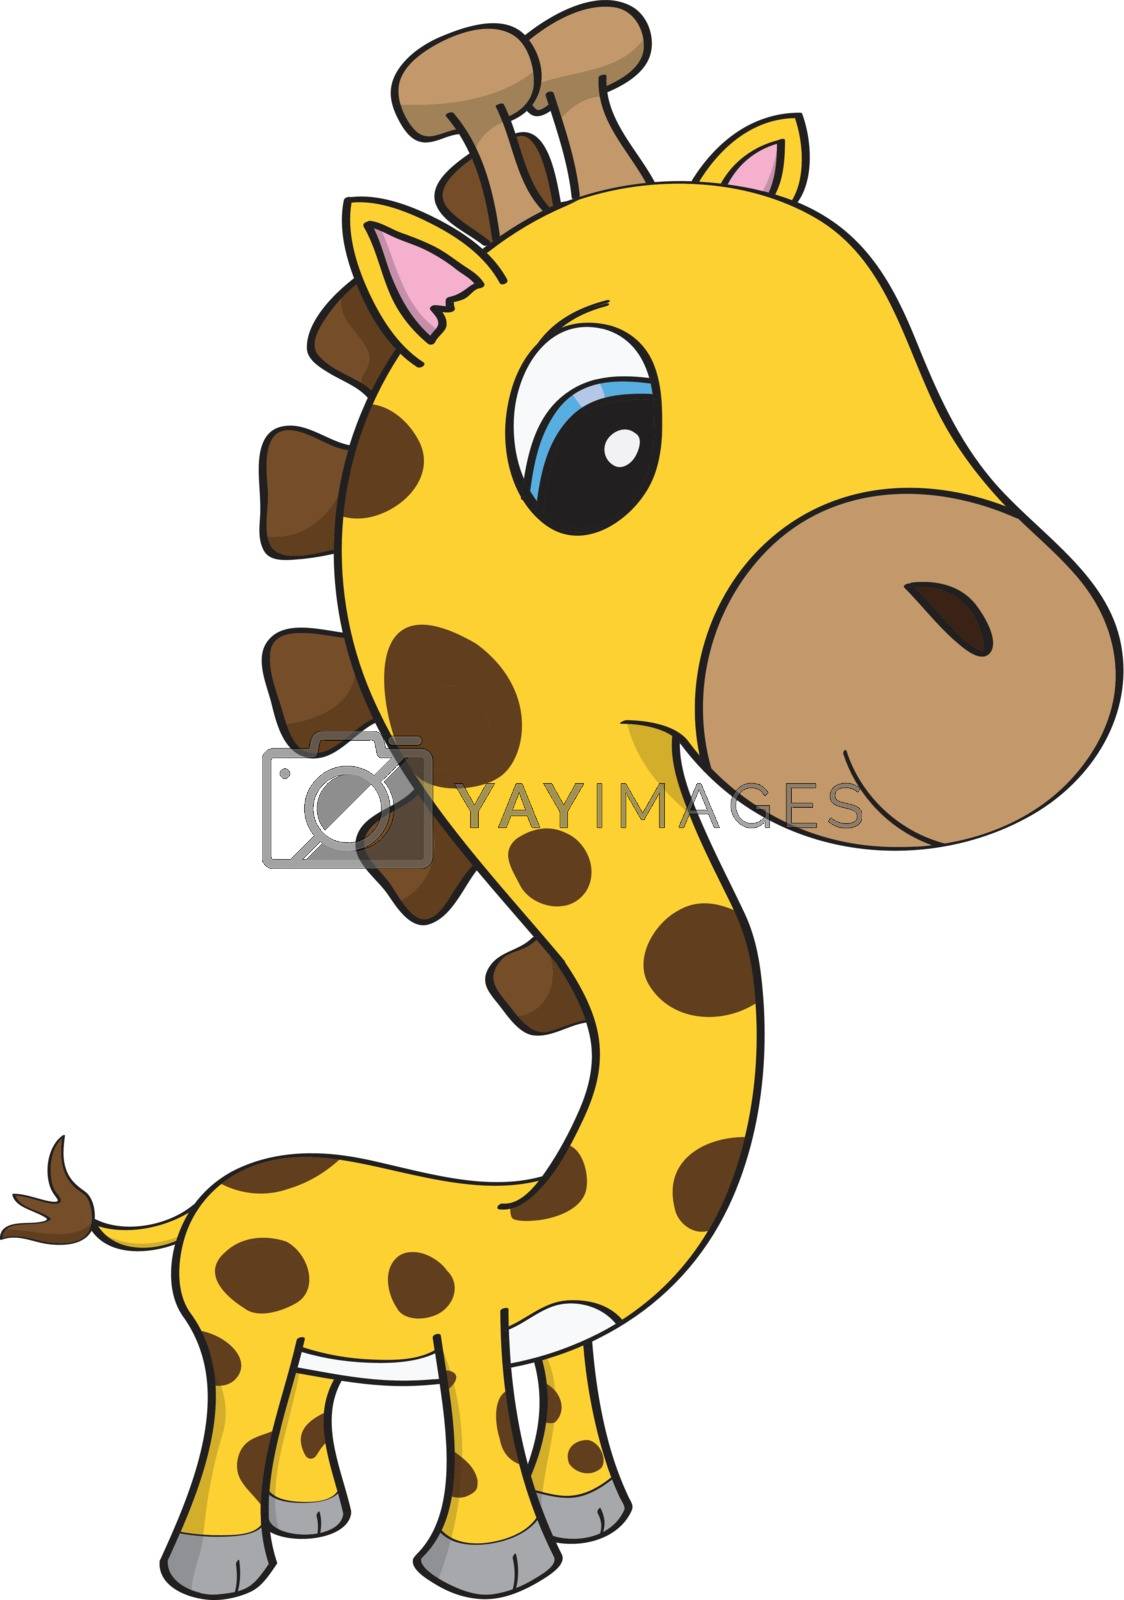 Royalty Free Vector | Cute cartoon baby giraffe with big blue eyes by  mischoko